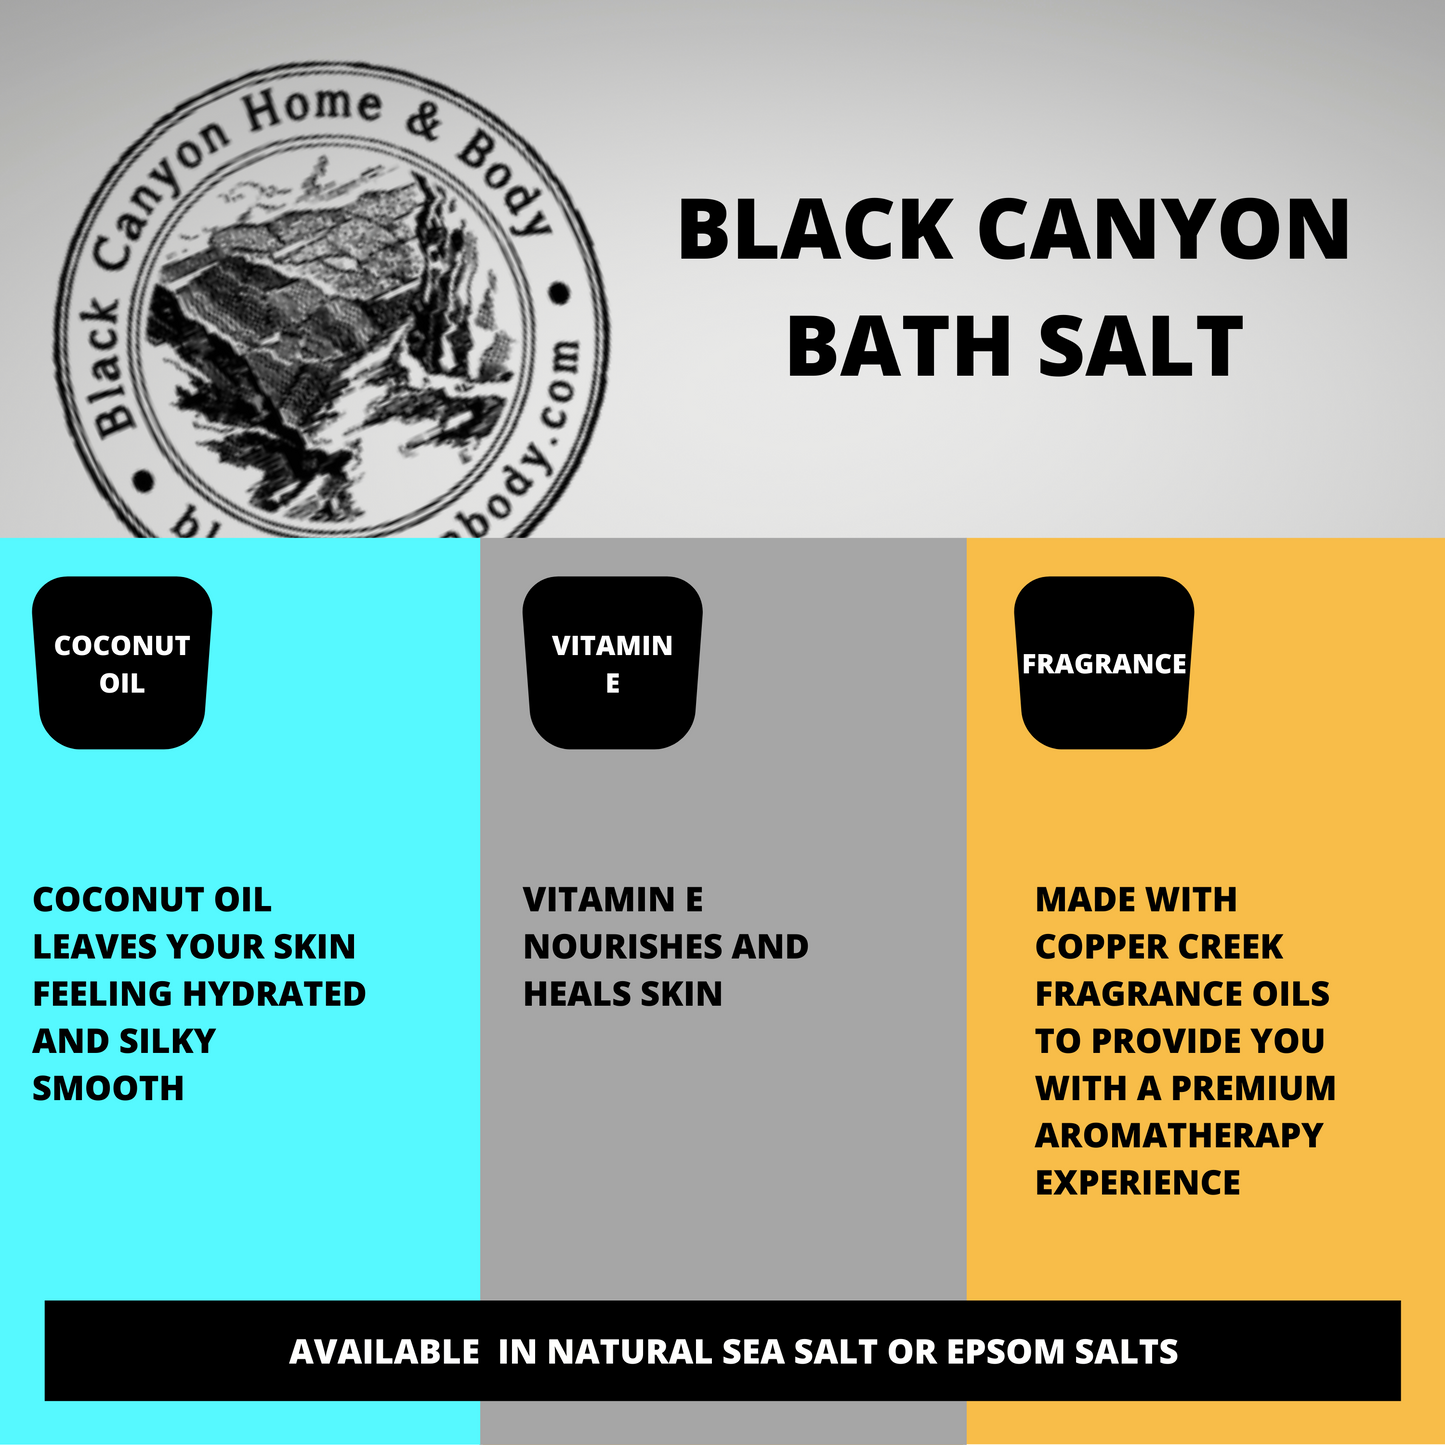 Black Canyon Moonlight Scented Sea Salt Bath Soak by Black Canyon Home & Body